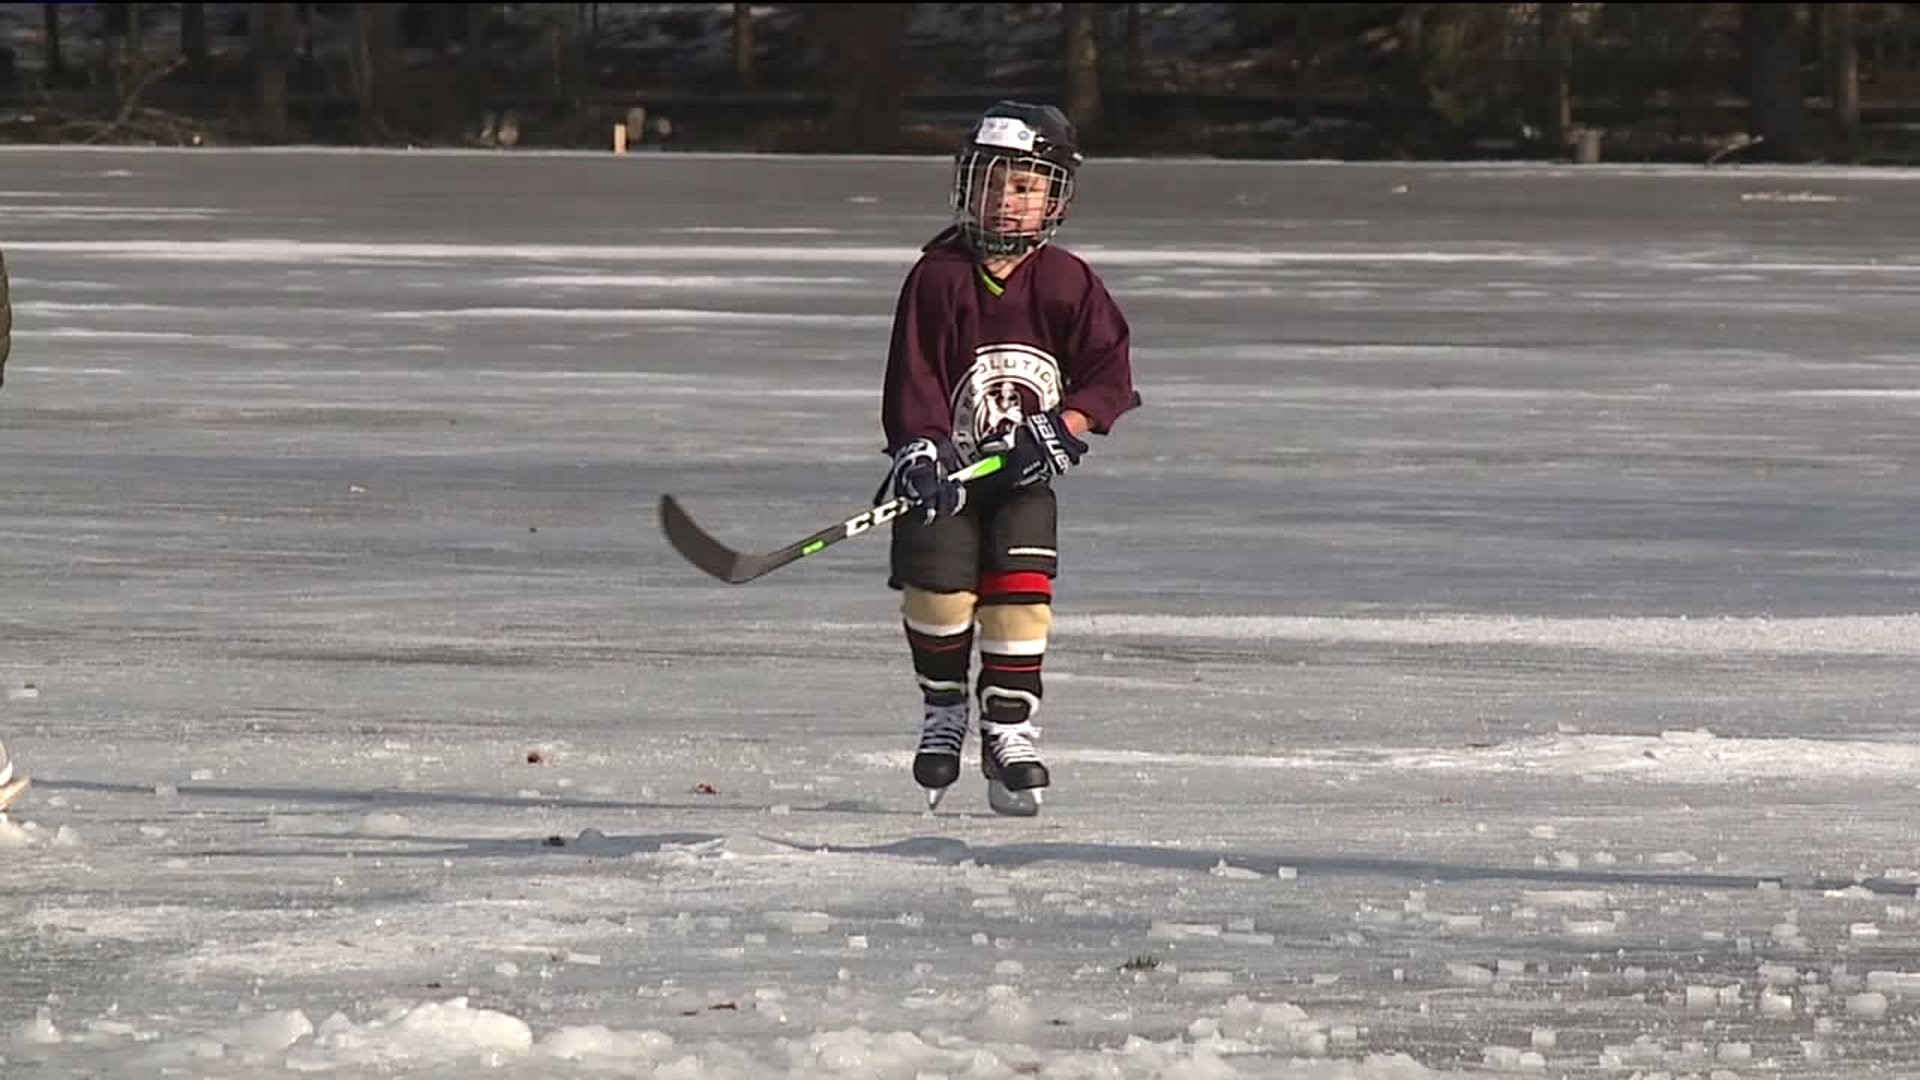 Playing Hockey on Frozen Pond